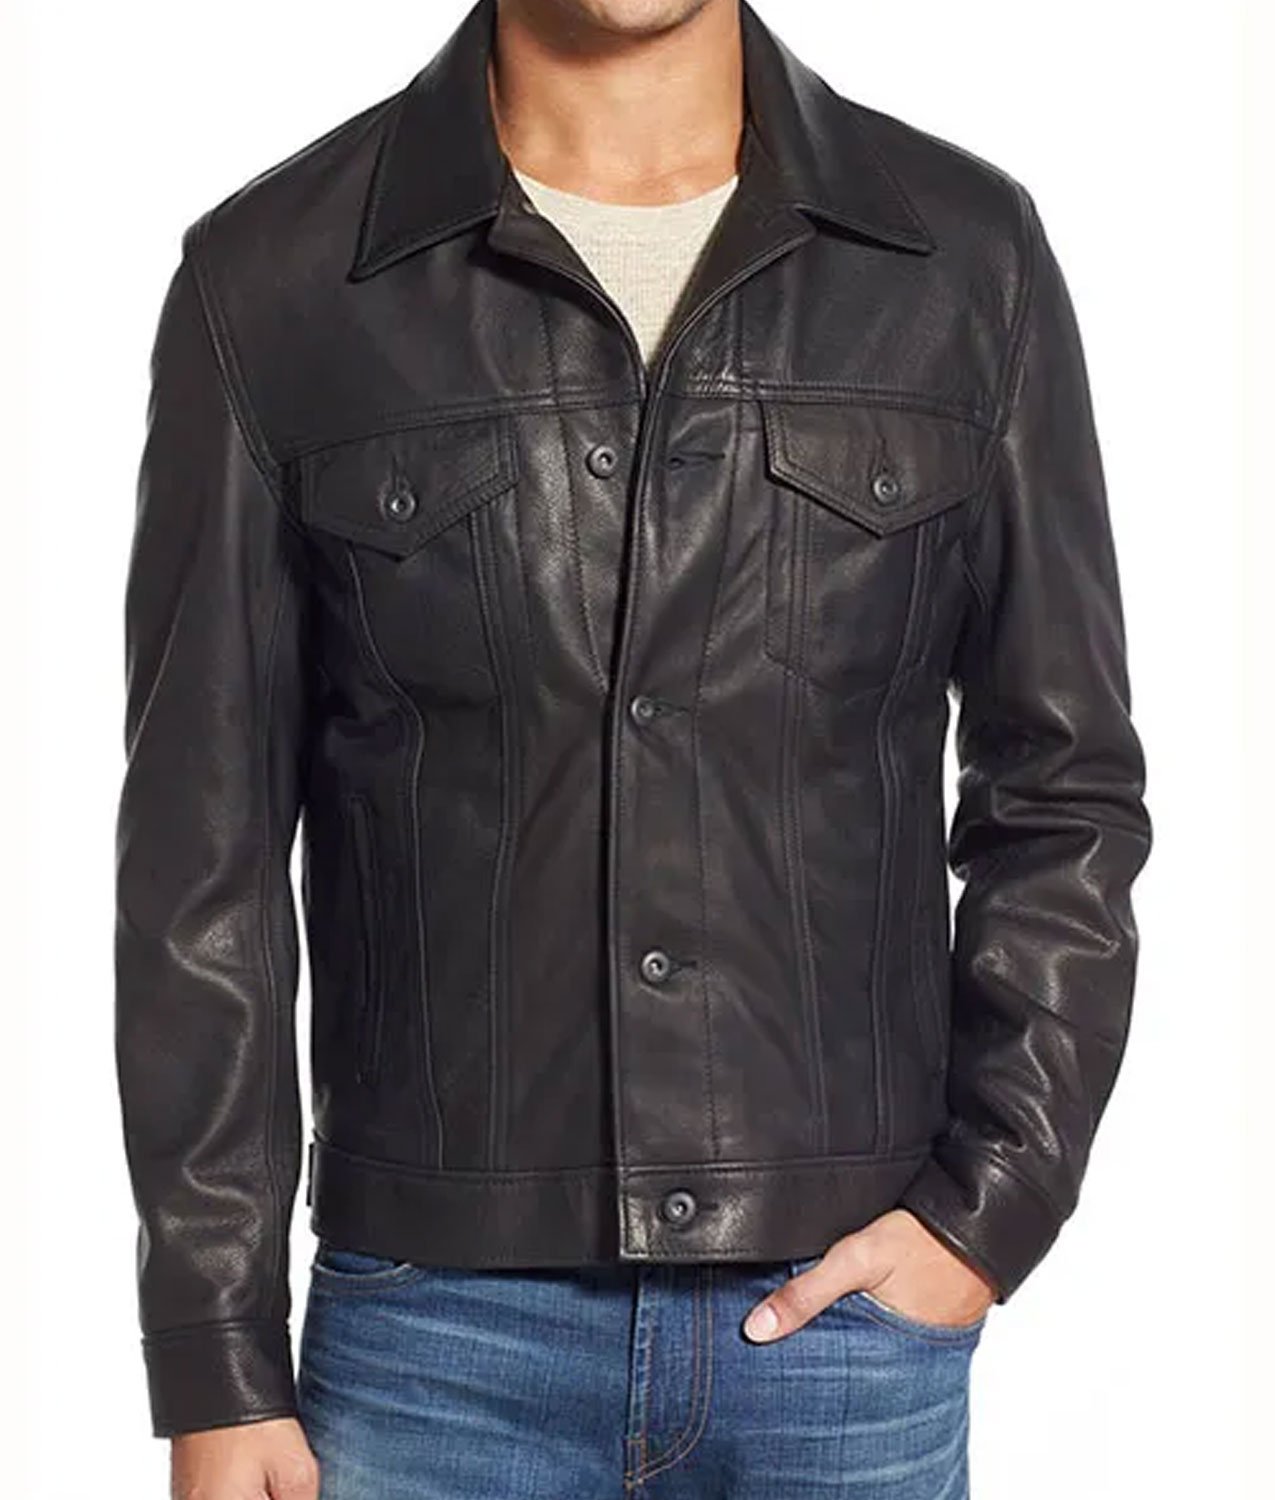 Uncharted Leather Jacket | Drake Tom Holland Jacket